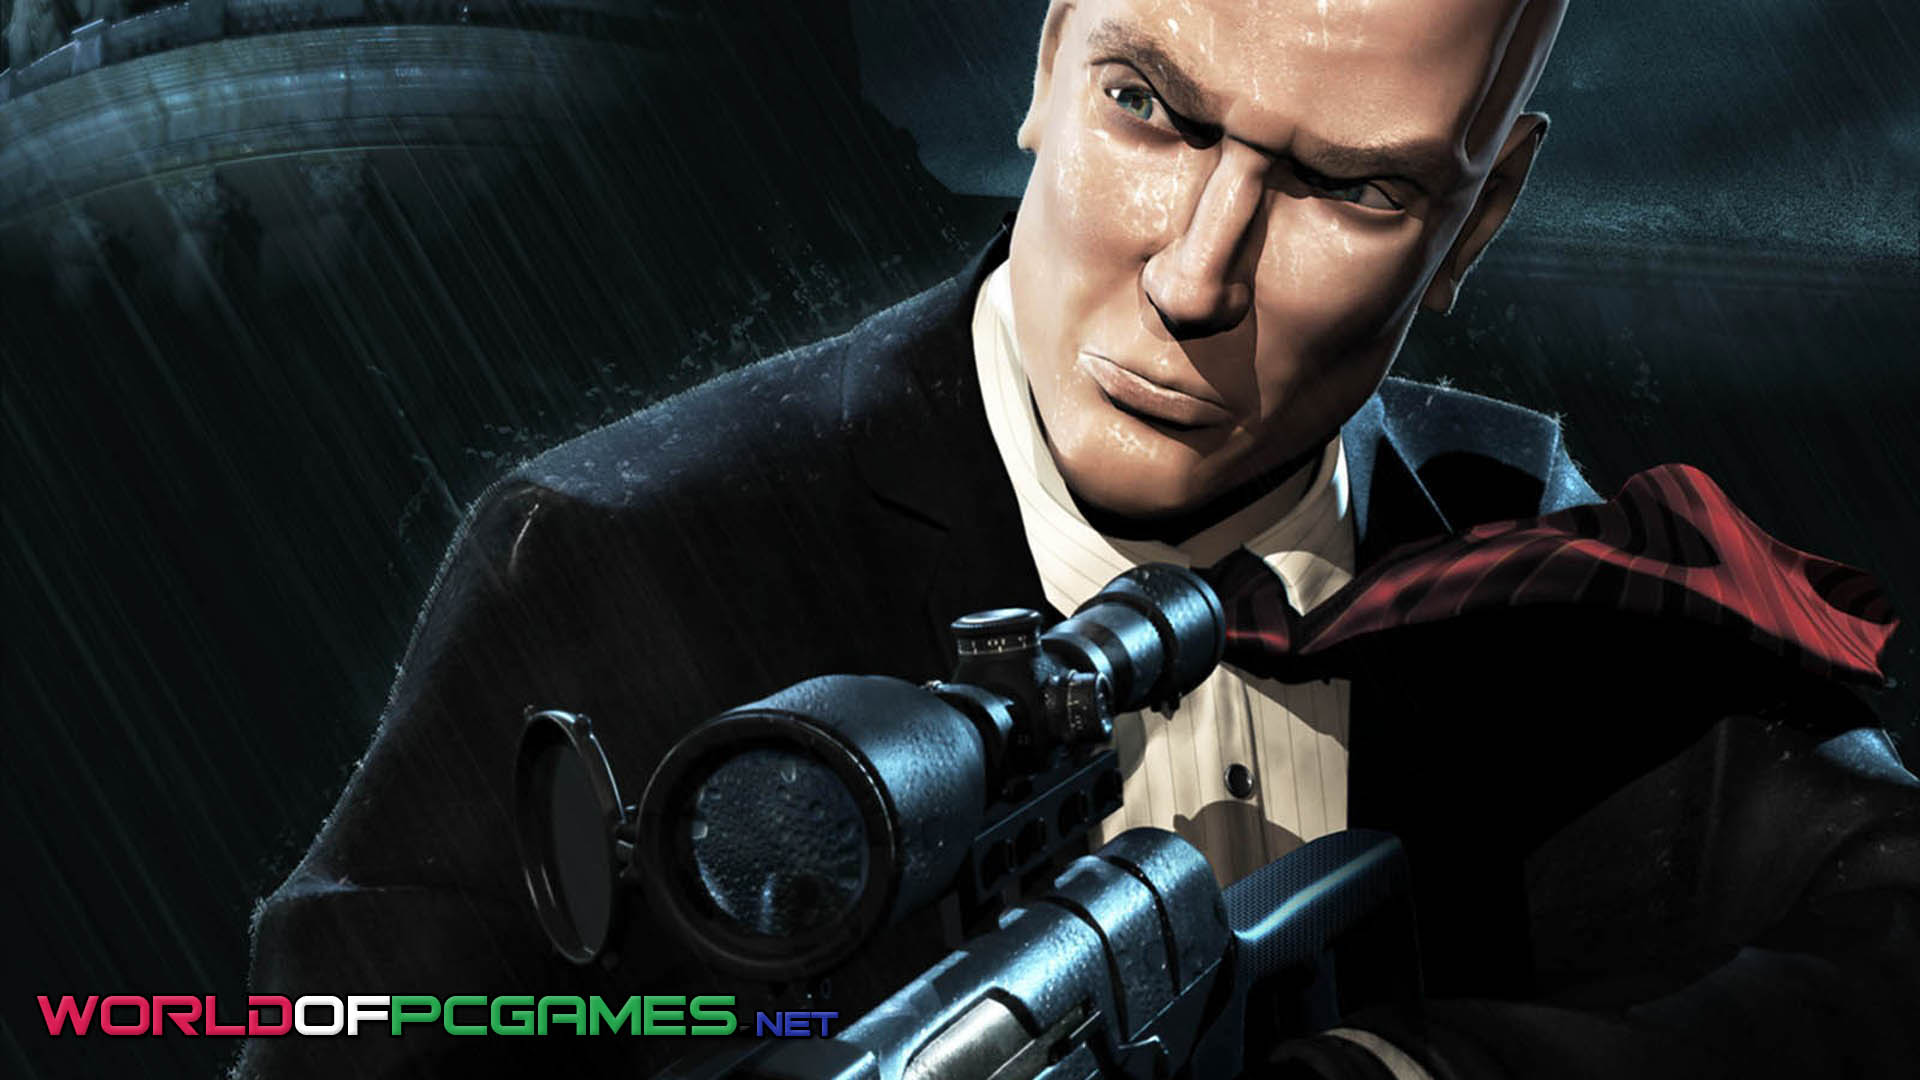 Hitman Codename 47 Free Download PC Game By Worldofpcgames